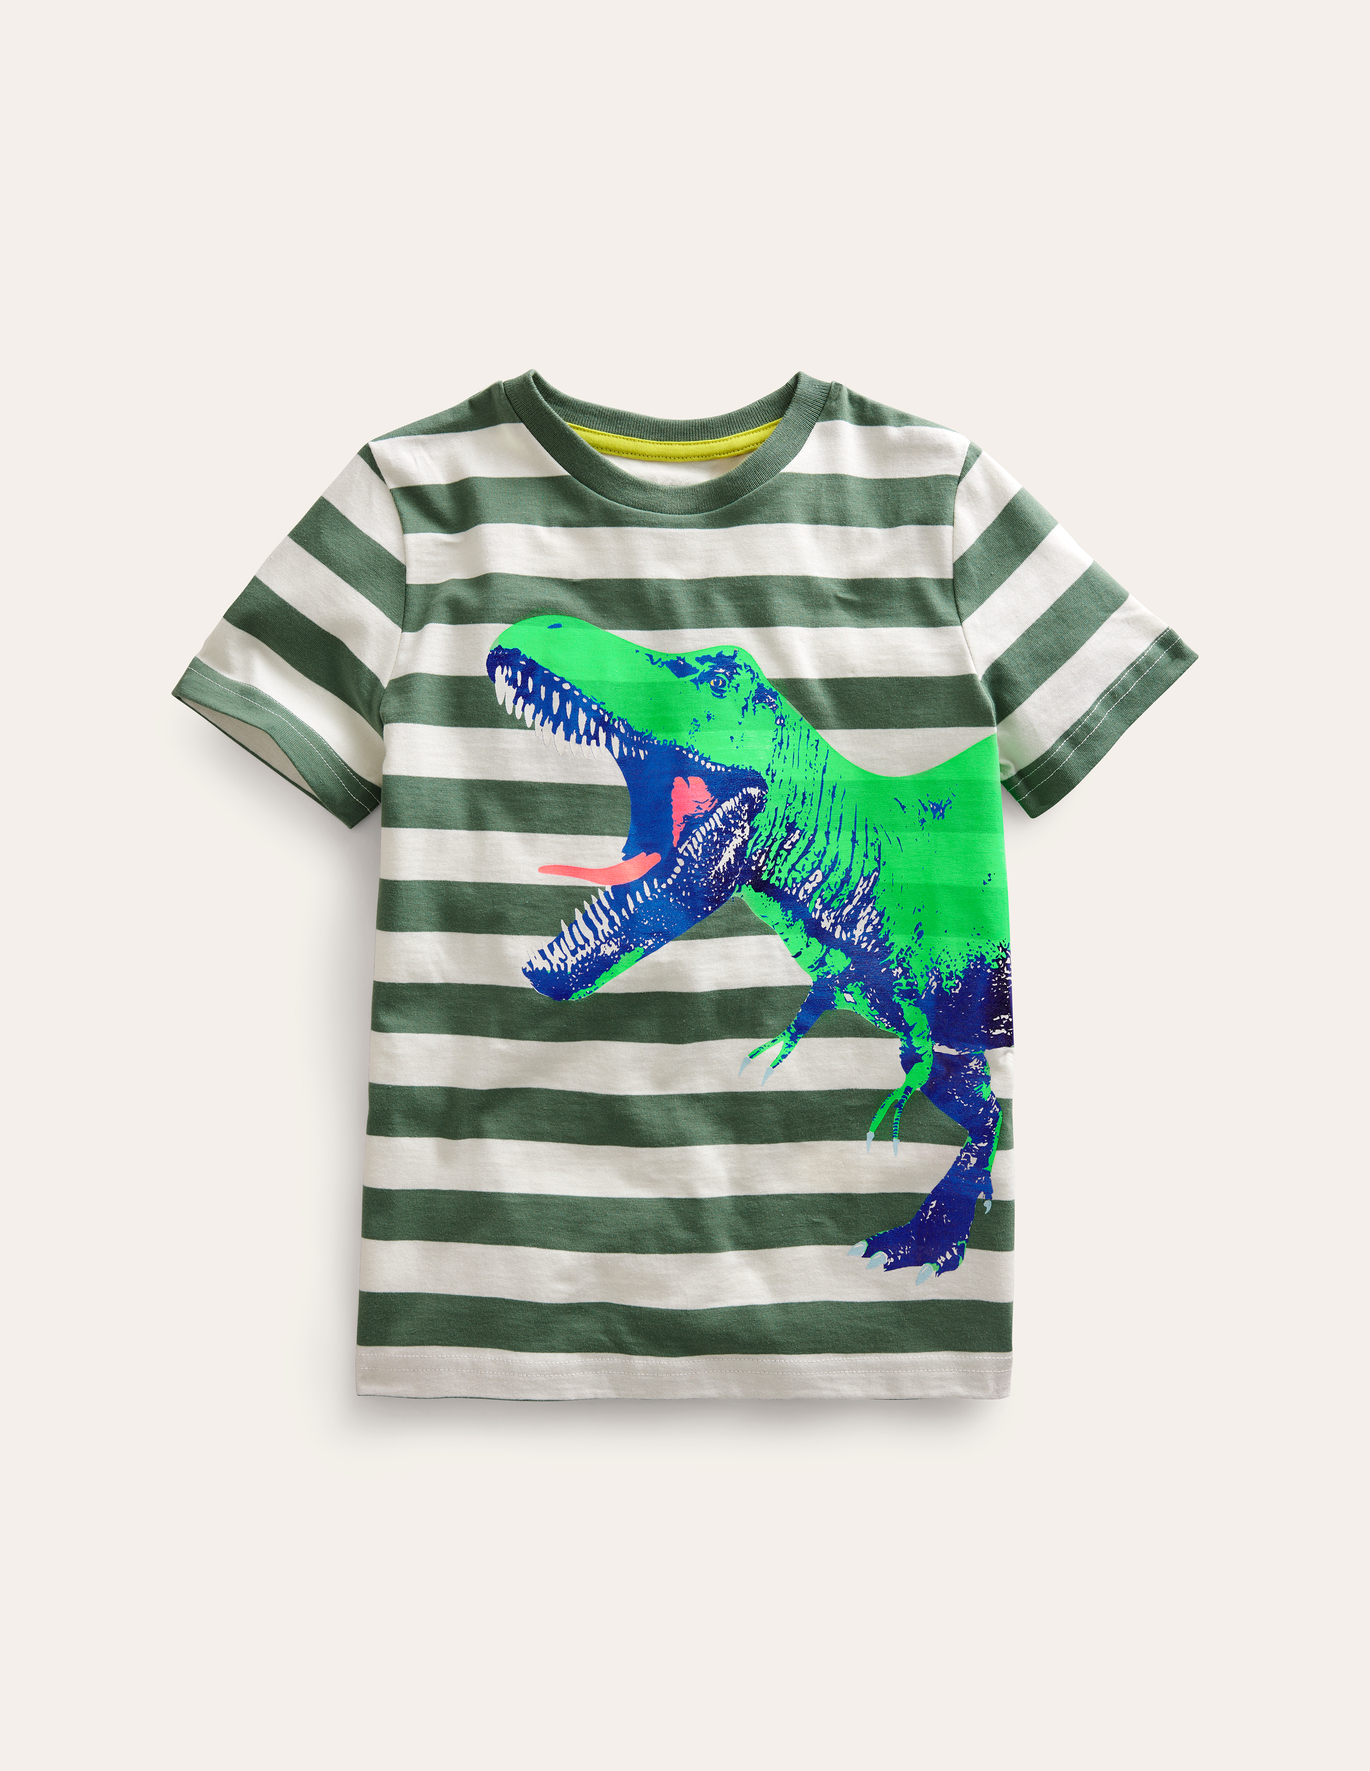 Boden Photographic T-shirt - Cobble Grey/Ivory Dinosaur